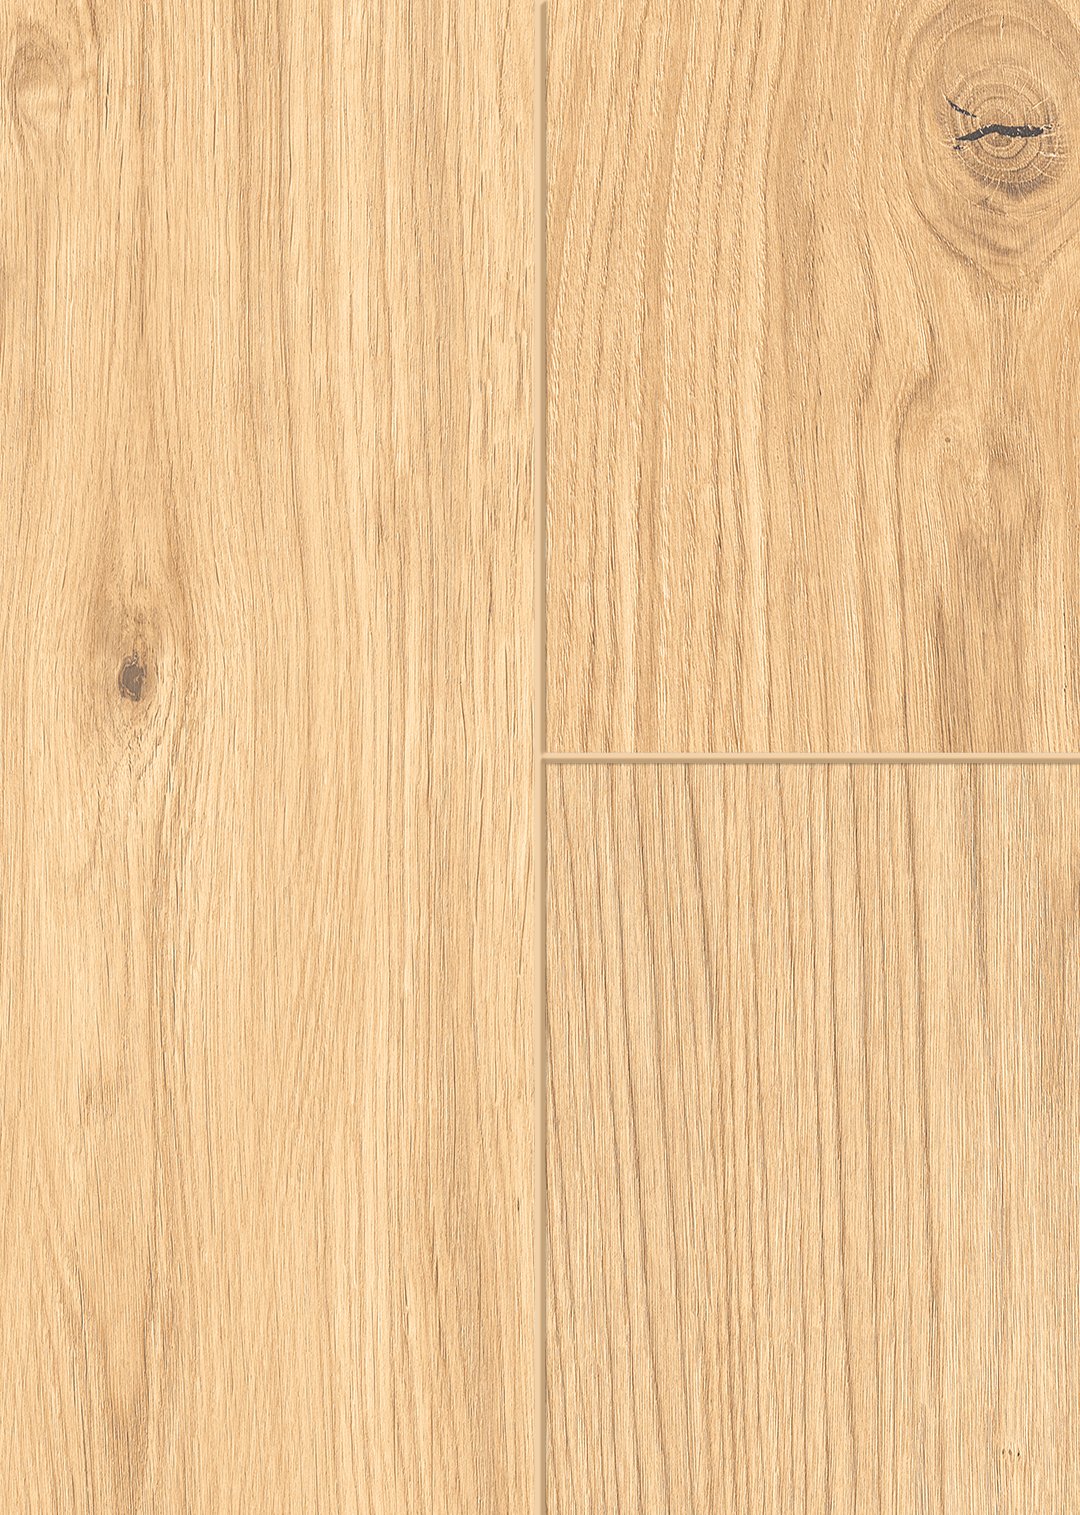 SPC vinilinės grindys GREEN VINYL 56944, Karpatų ąžuolo spalvos, 1290 x 203 x 4 mm, 32/AC4 - 2